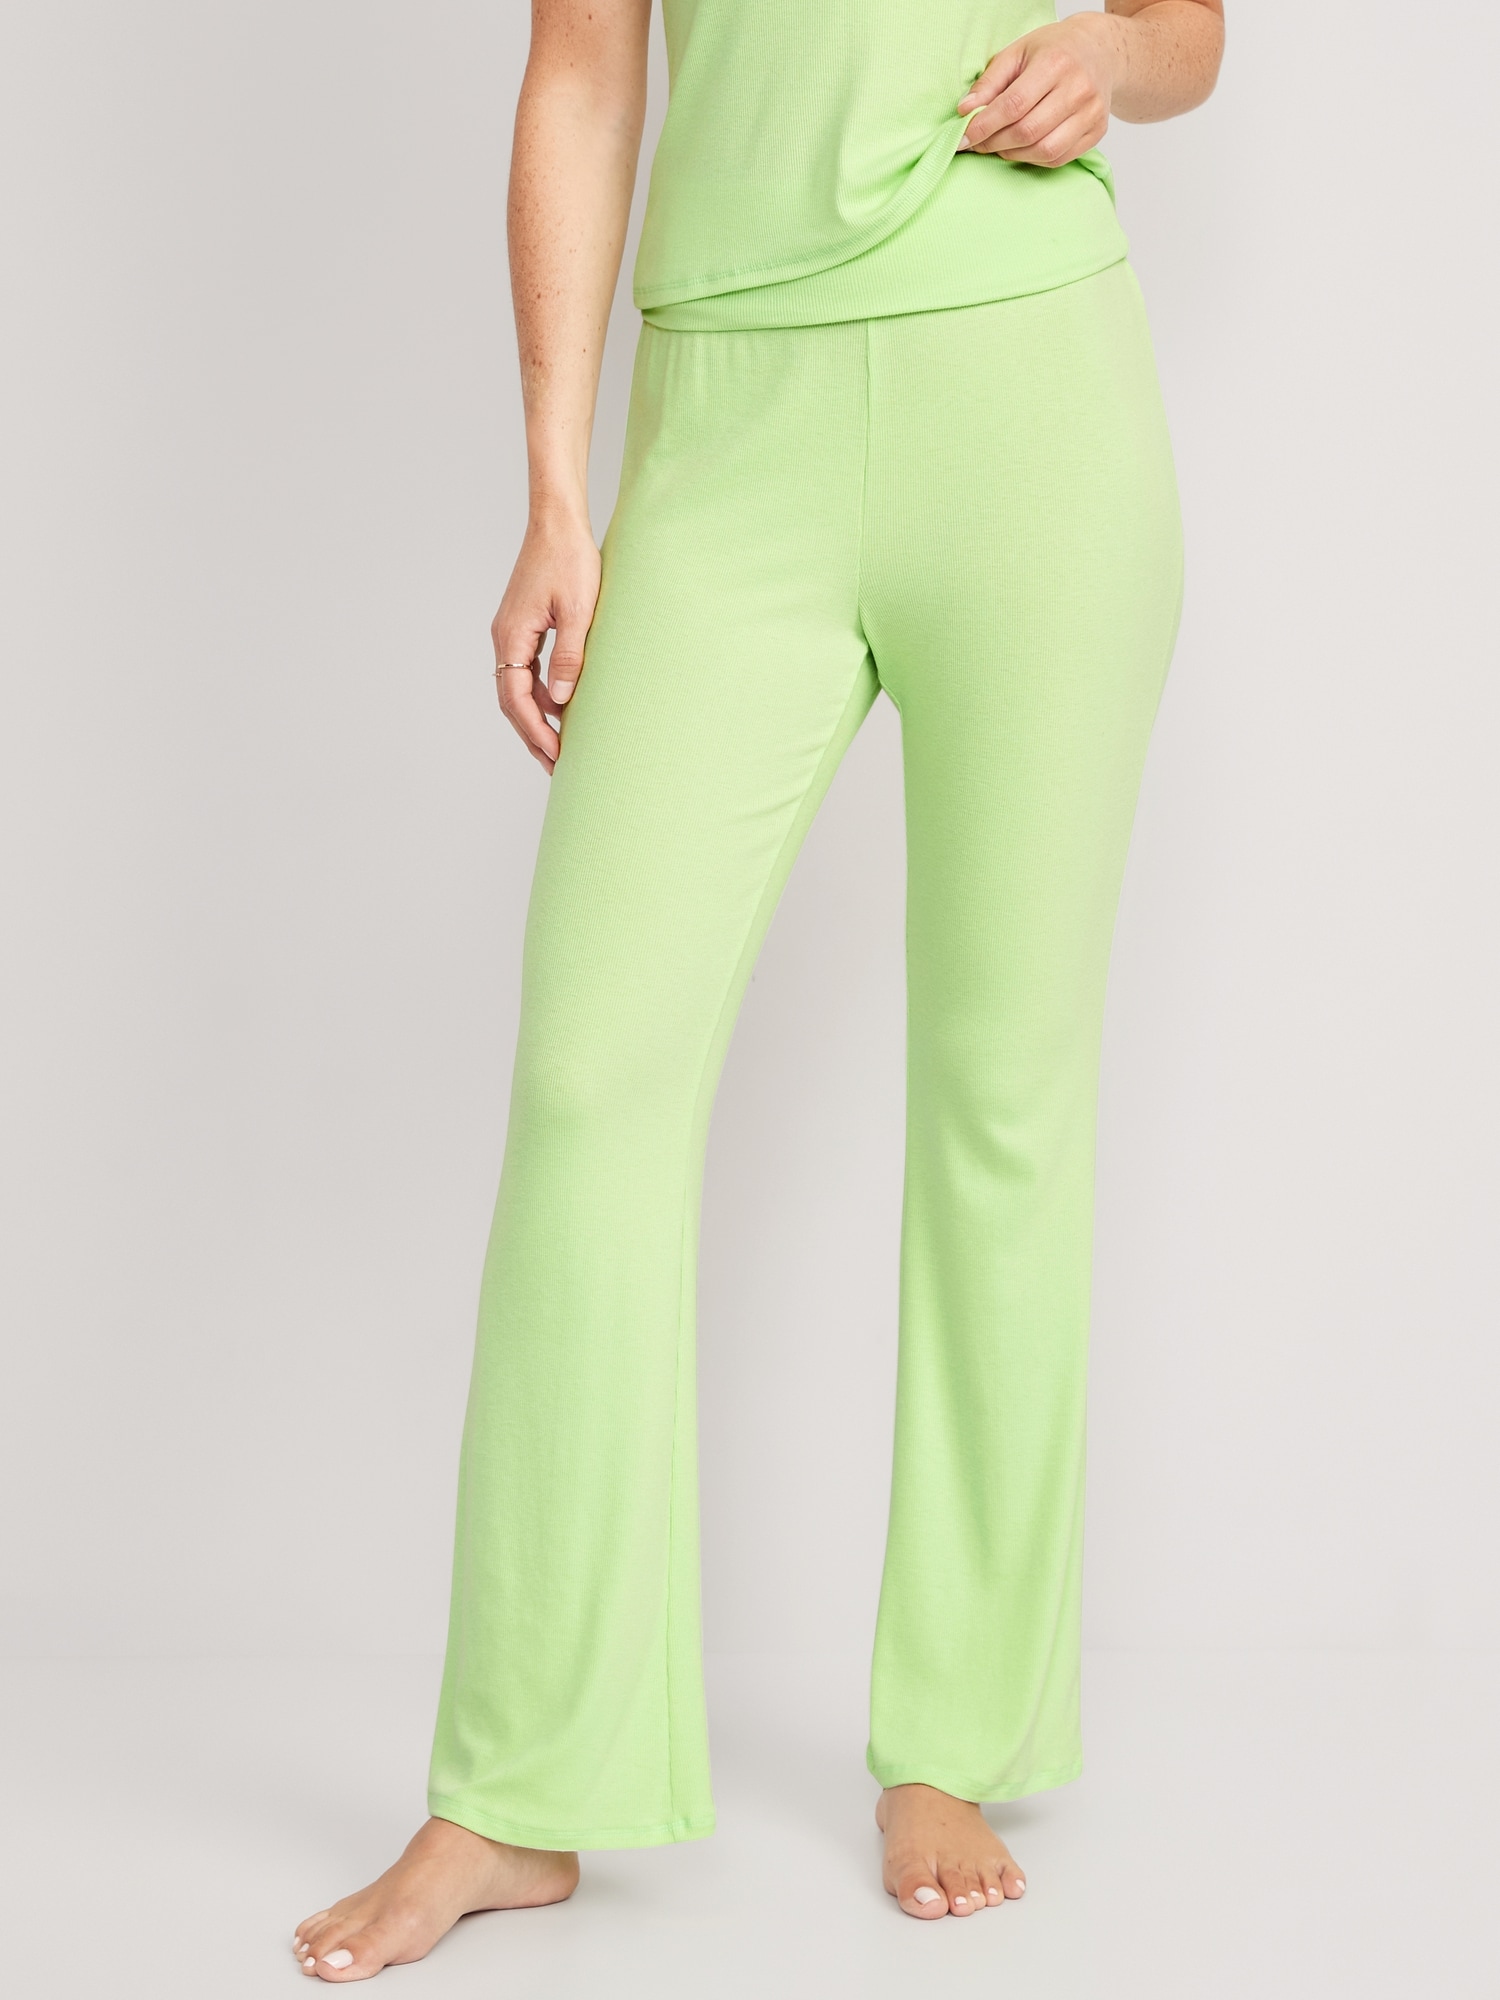 Old Navy Mid-Rise UltraLite Foldover-Waist Flare Lounge Pants for Women green. 1